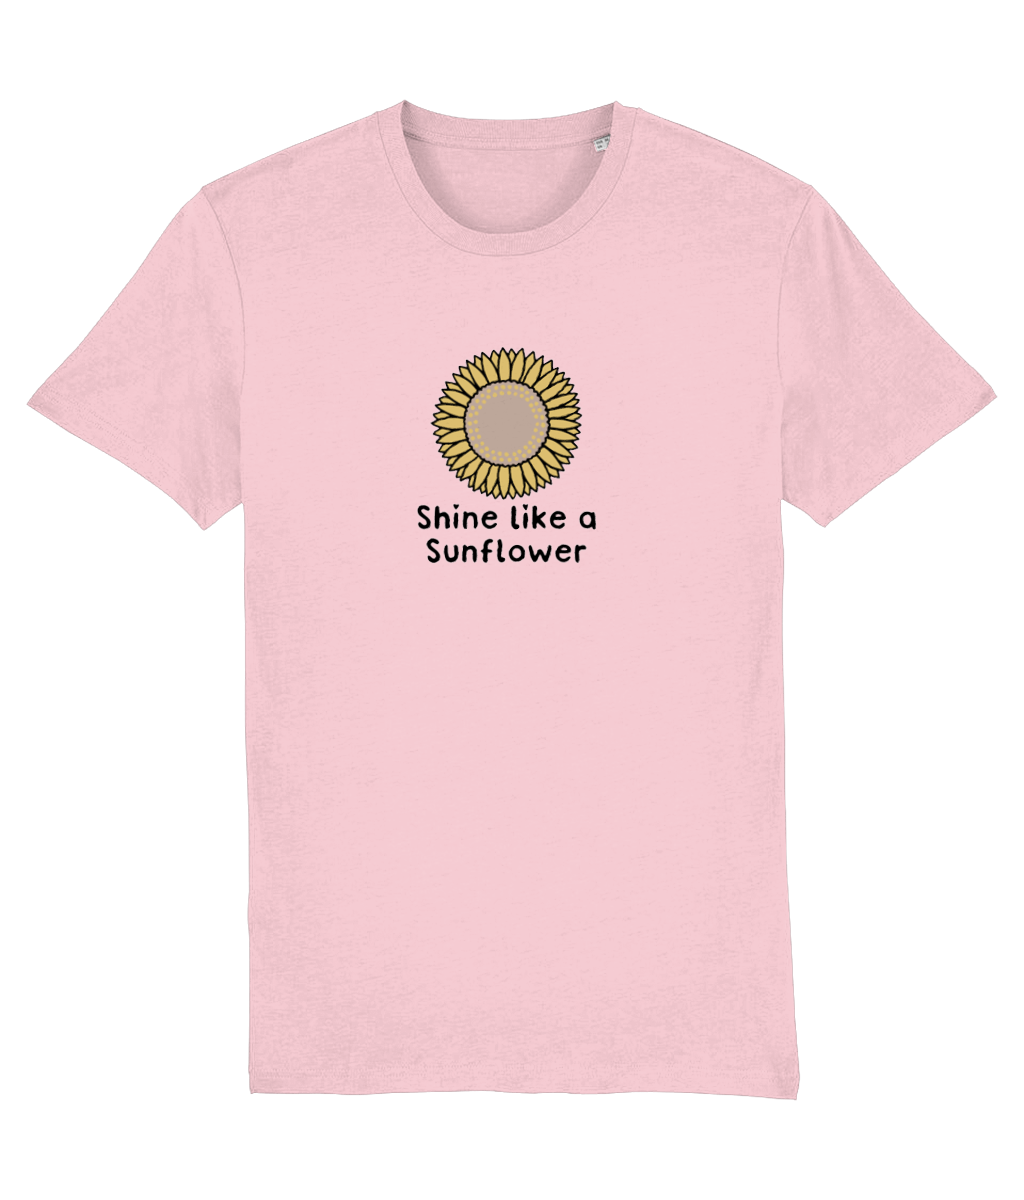 Shine Like A Sunflower Design 2 - Adult T-Shirt - Multi Colour Options